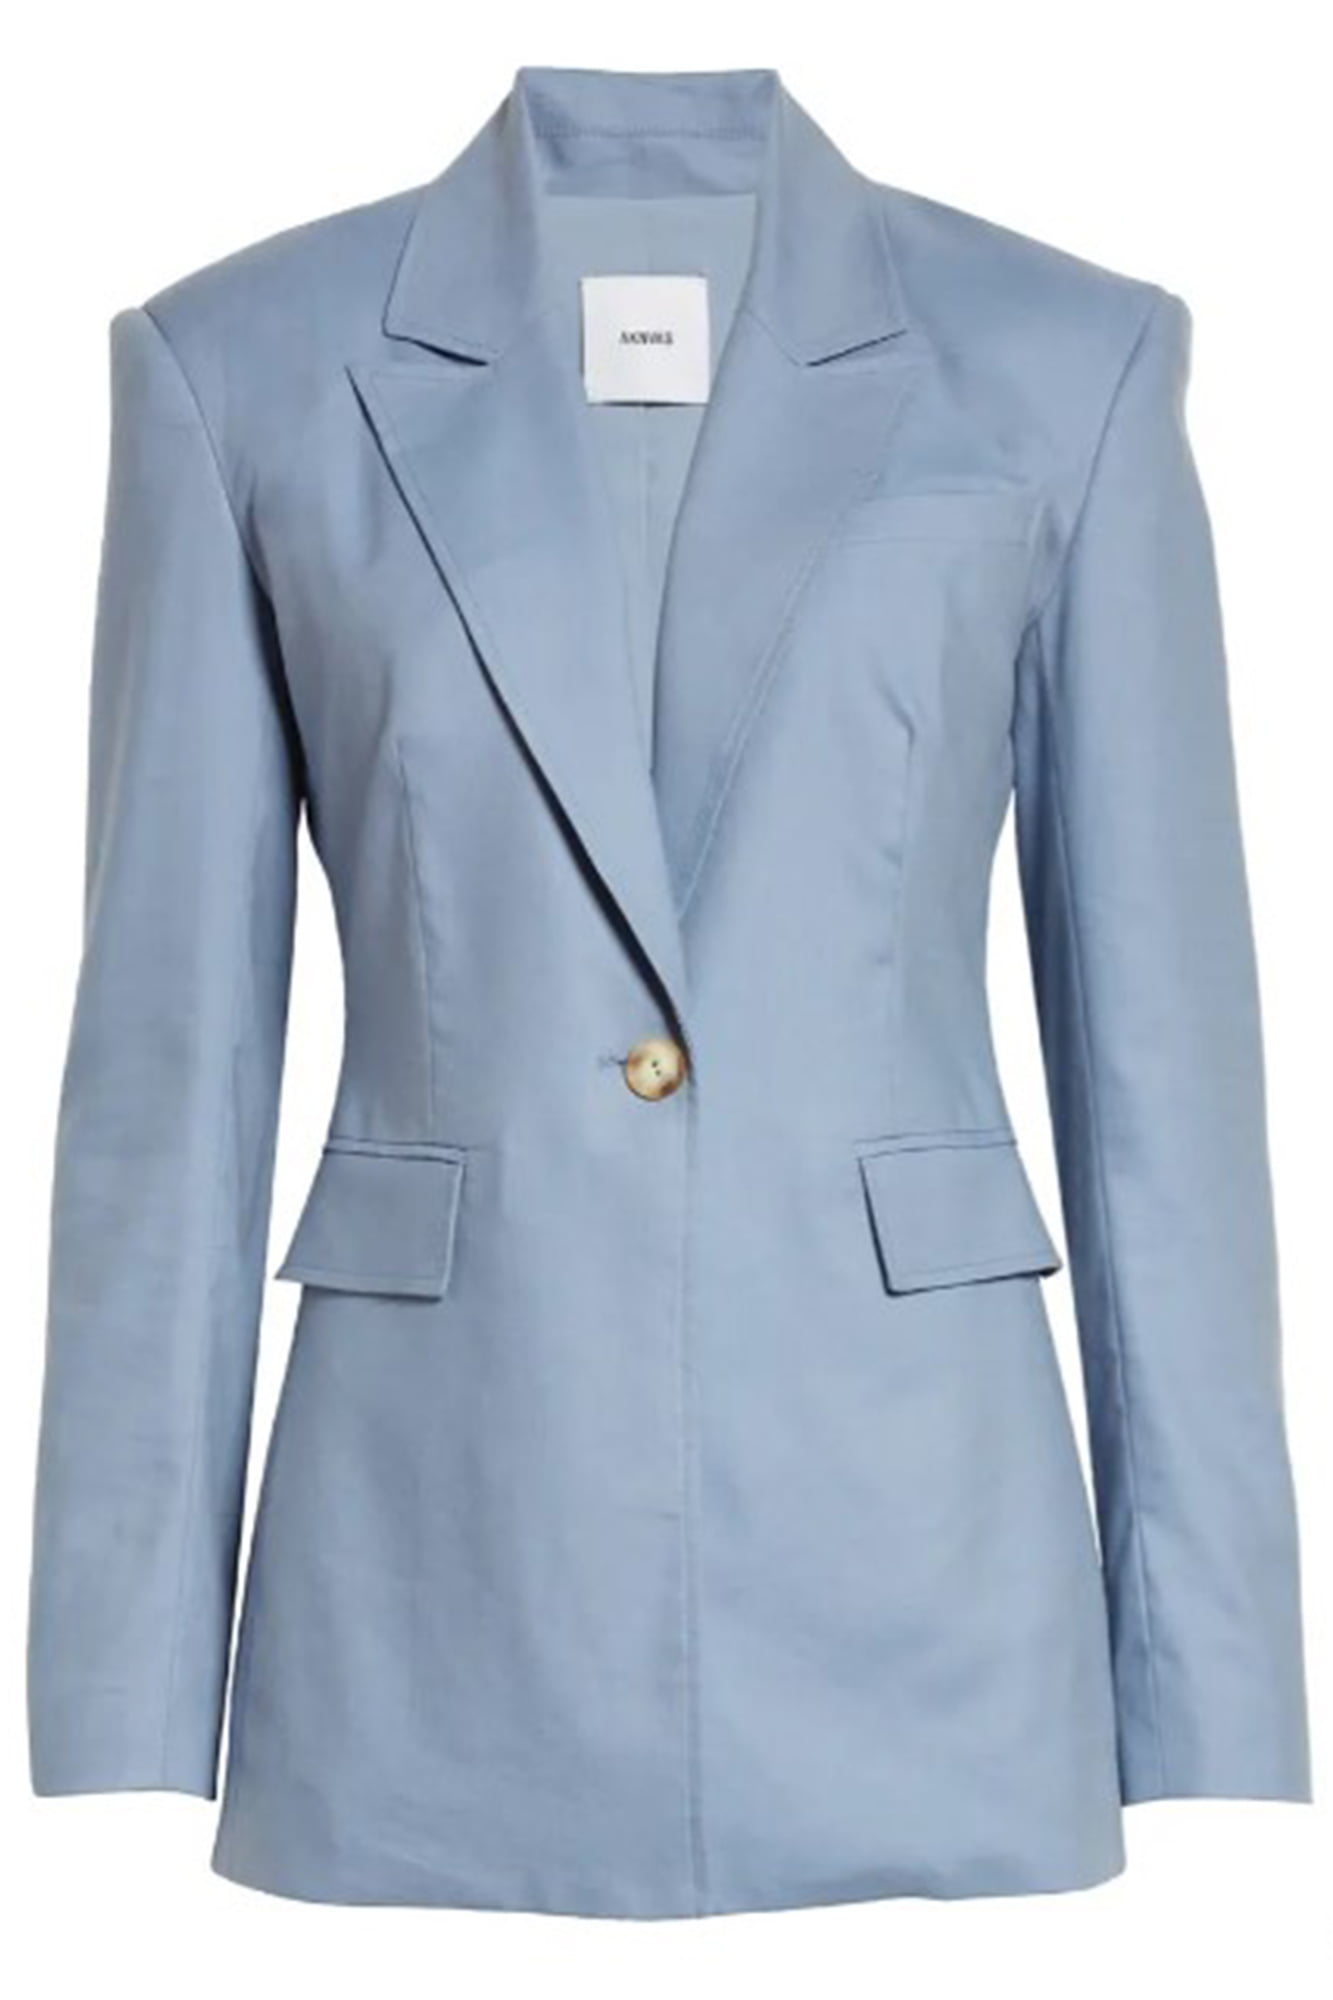 blue blazer for women's headshot